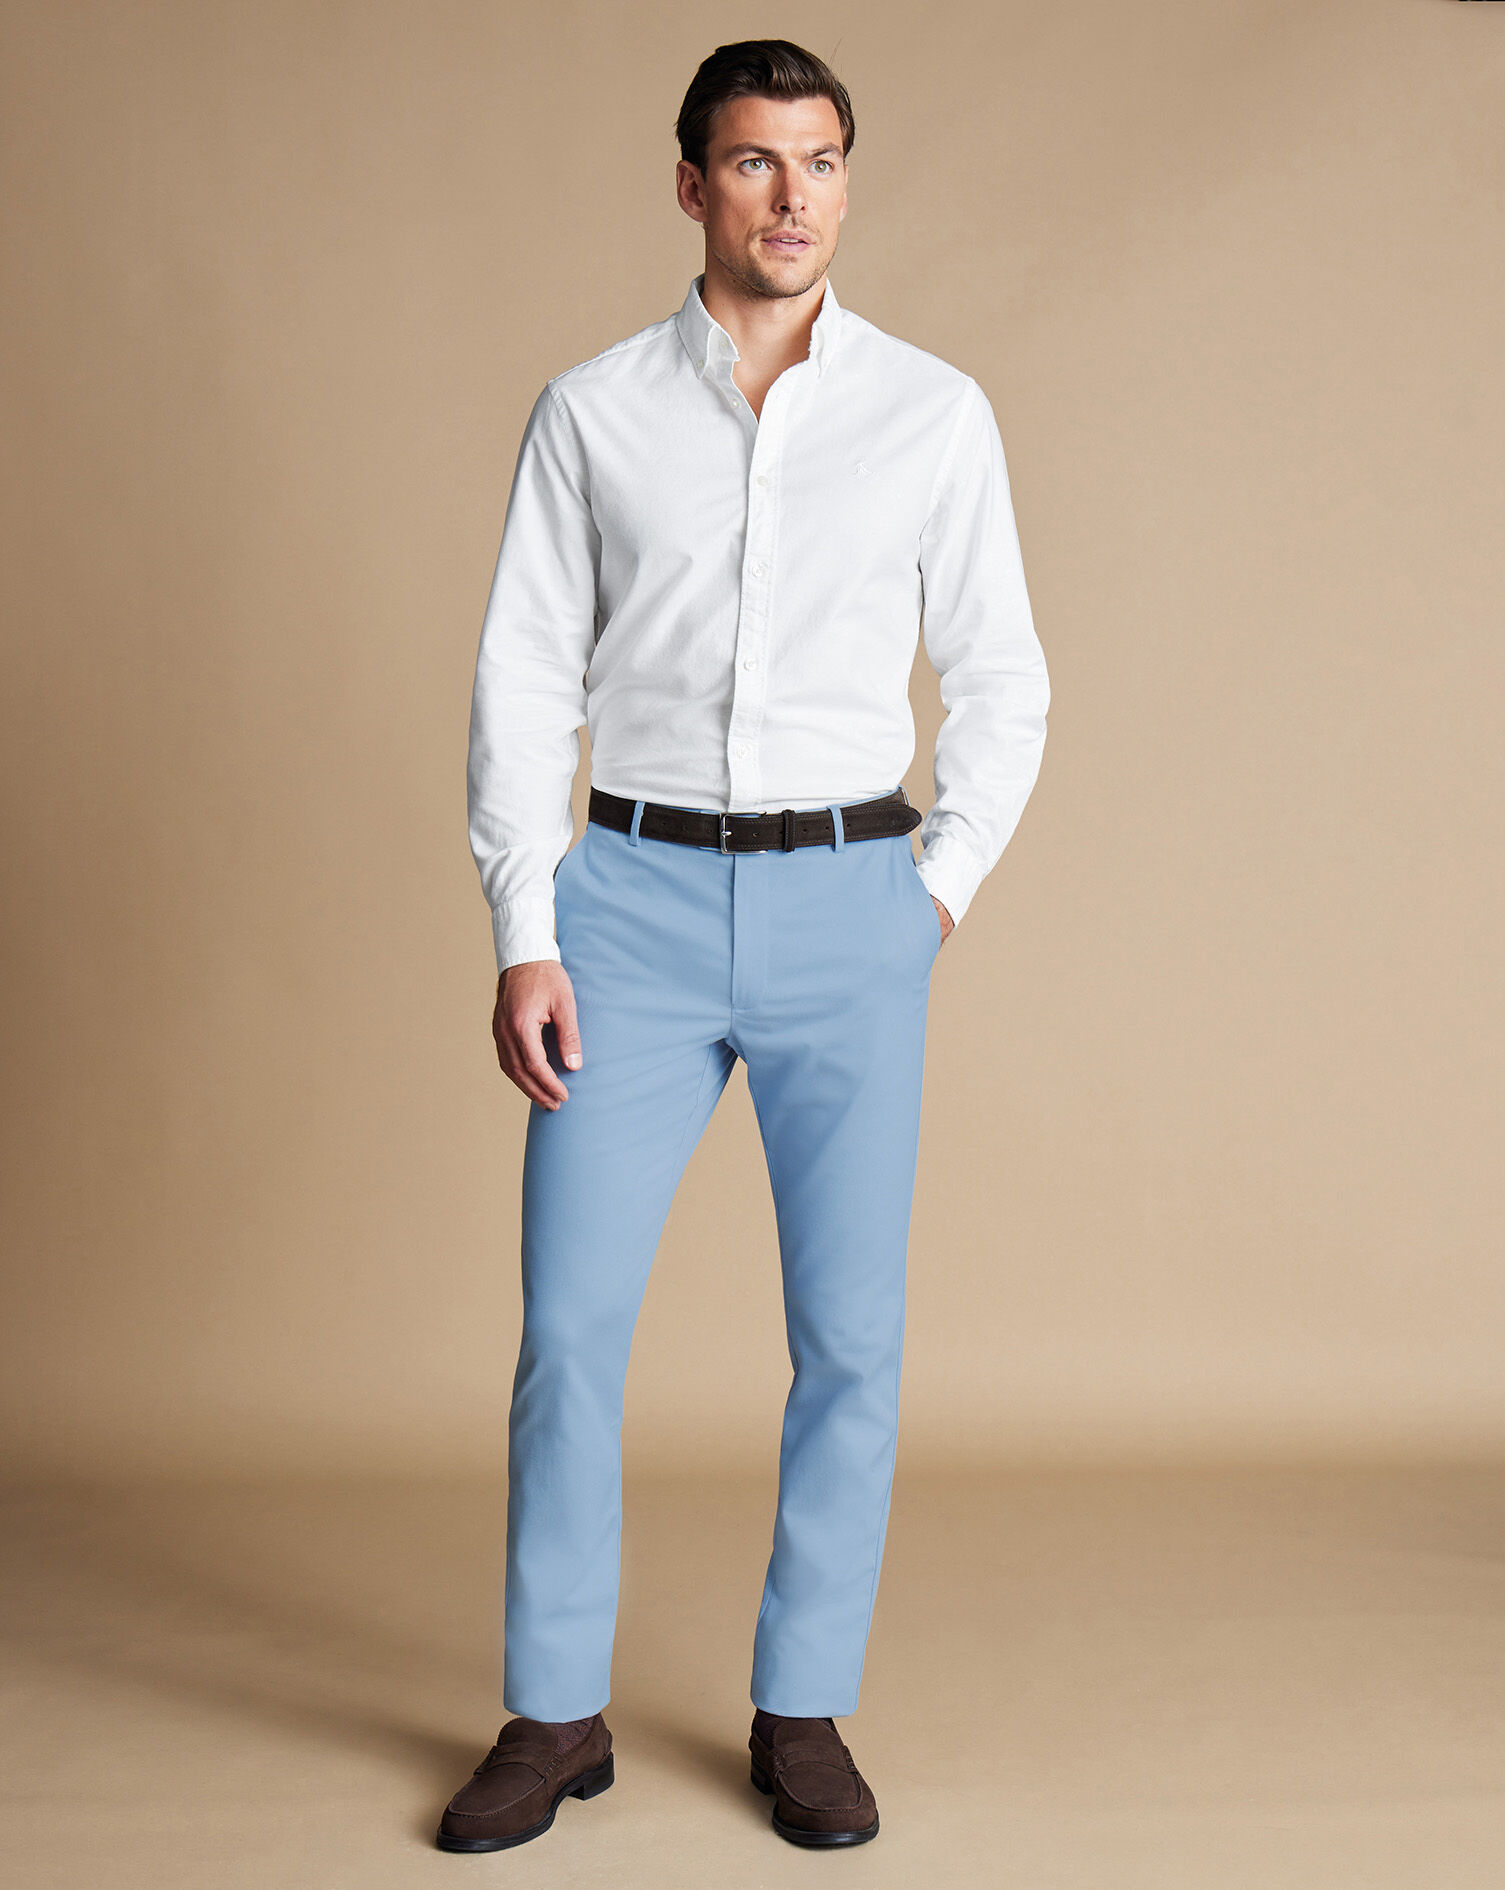 gray slacks with tie - Google Search | Light blue shirts, Blue shirt grey  pants, Light blue dress shirt